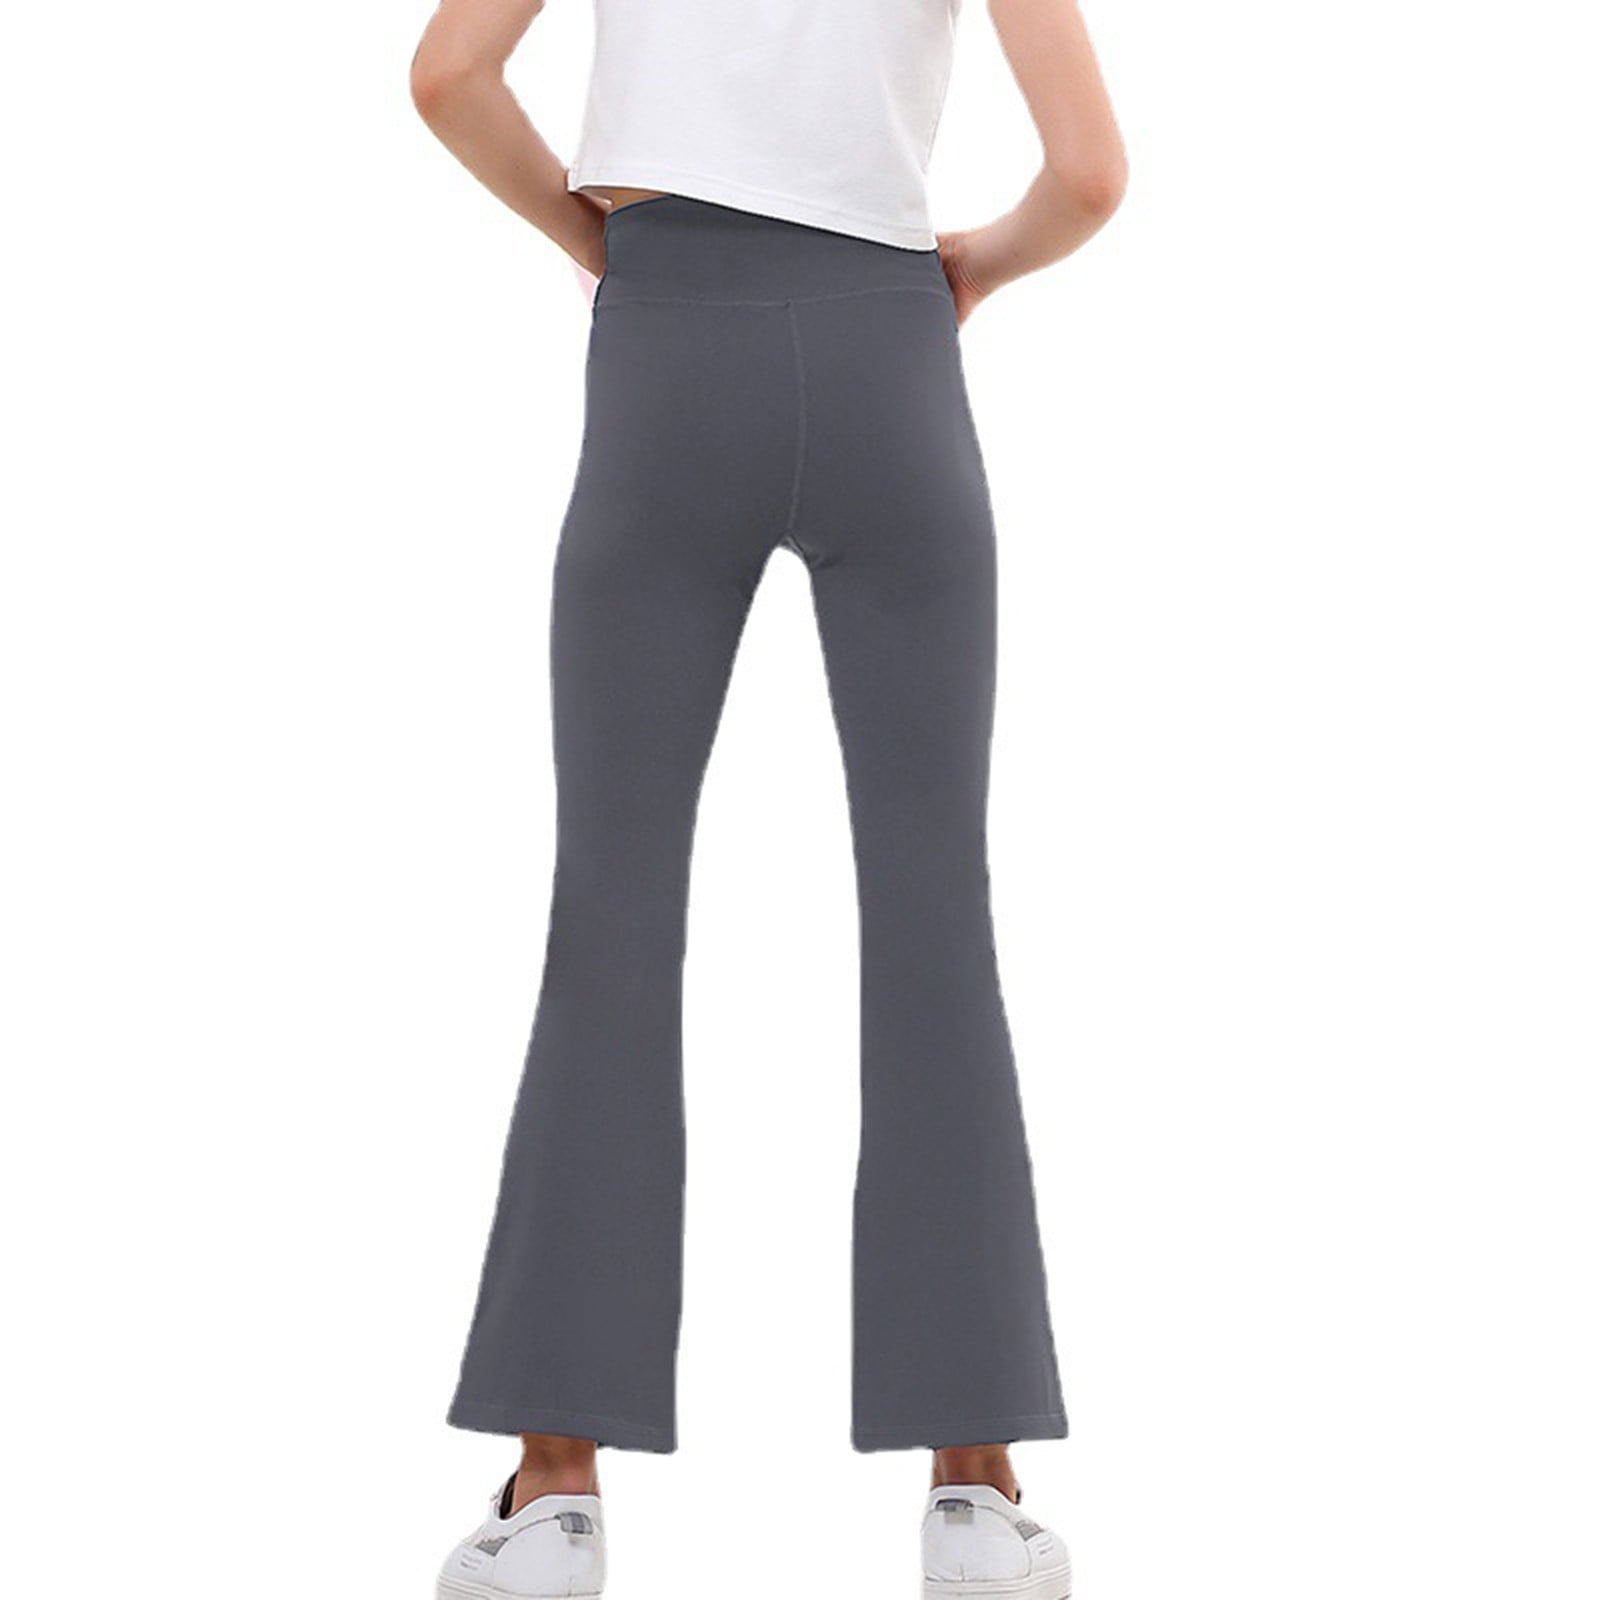 Bigersell Women's Patchwork Pants Full Length Pants Fashion Women